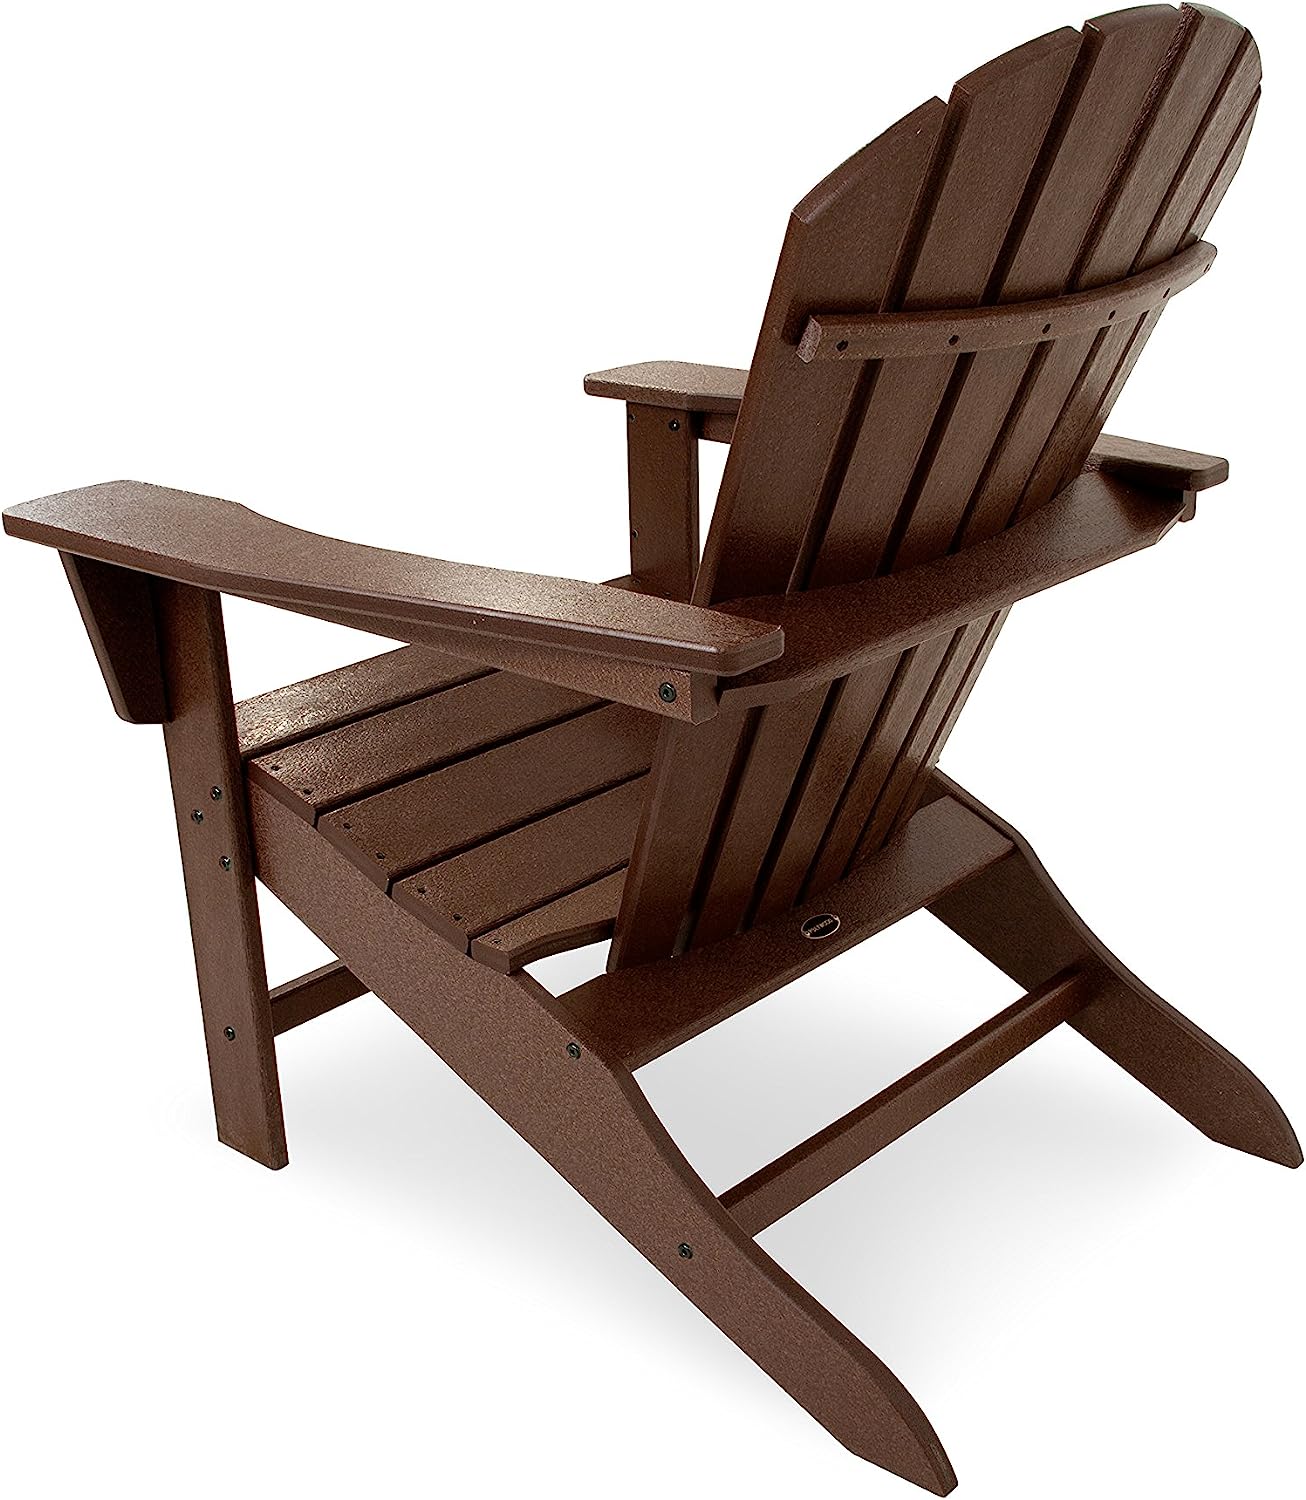 Grant Park Traditional Curveback Mahogany Adirondack Chair - $120